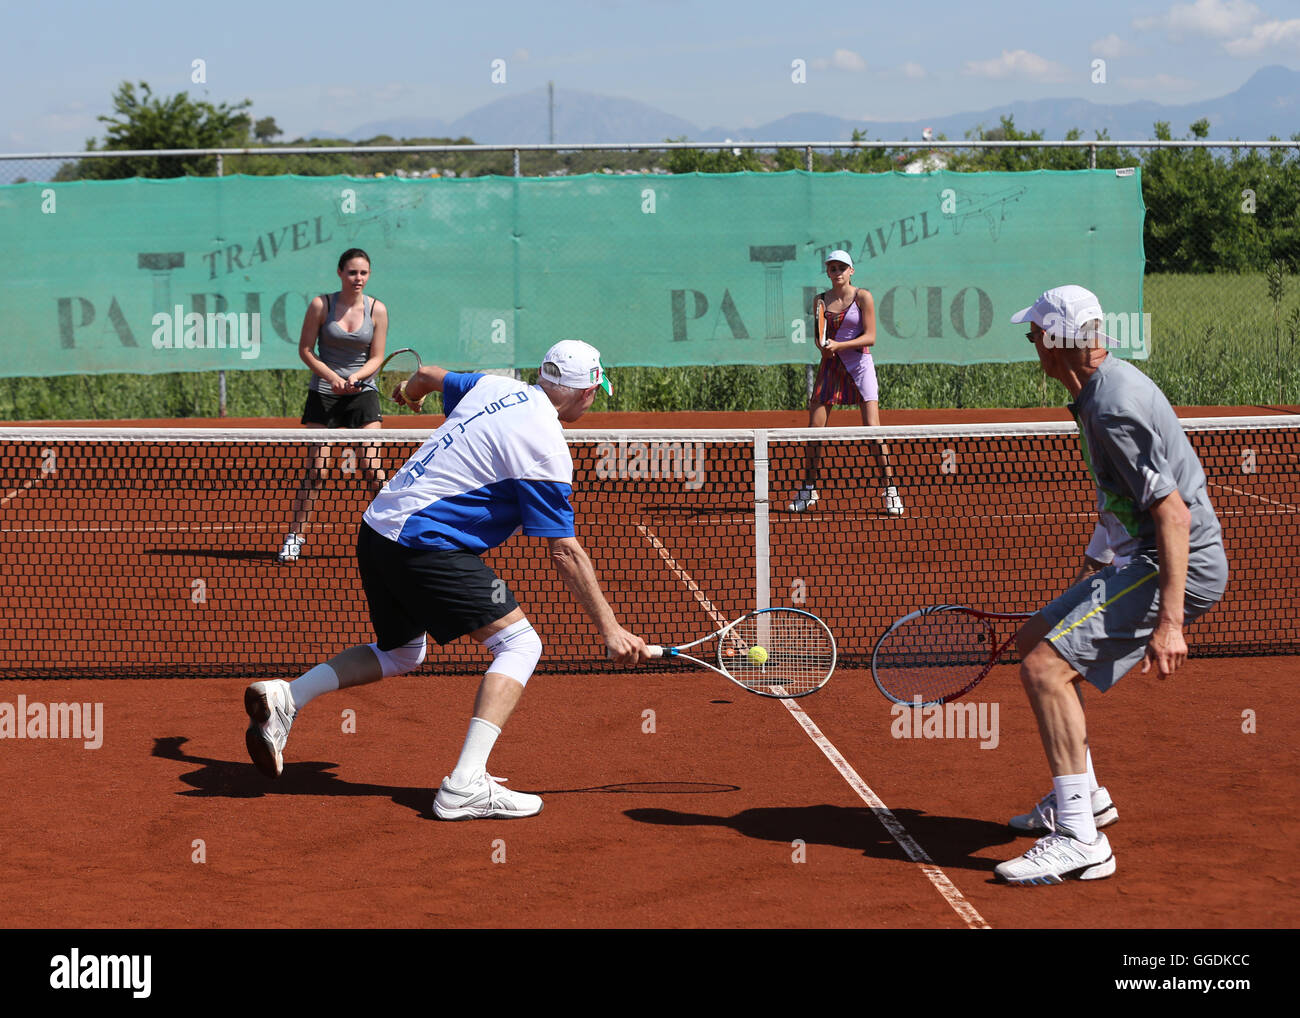 Tennis-Doppel-Match auf Sandplatz Stockfoto